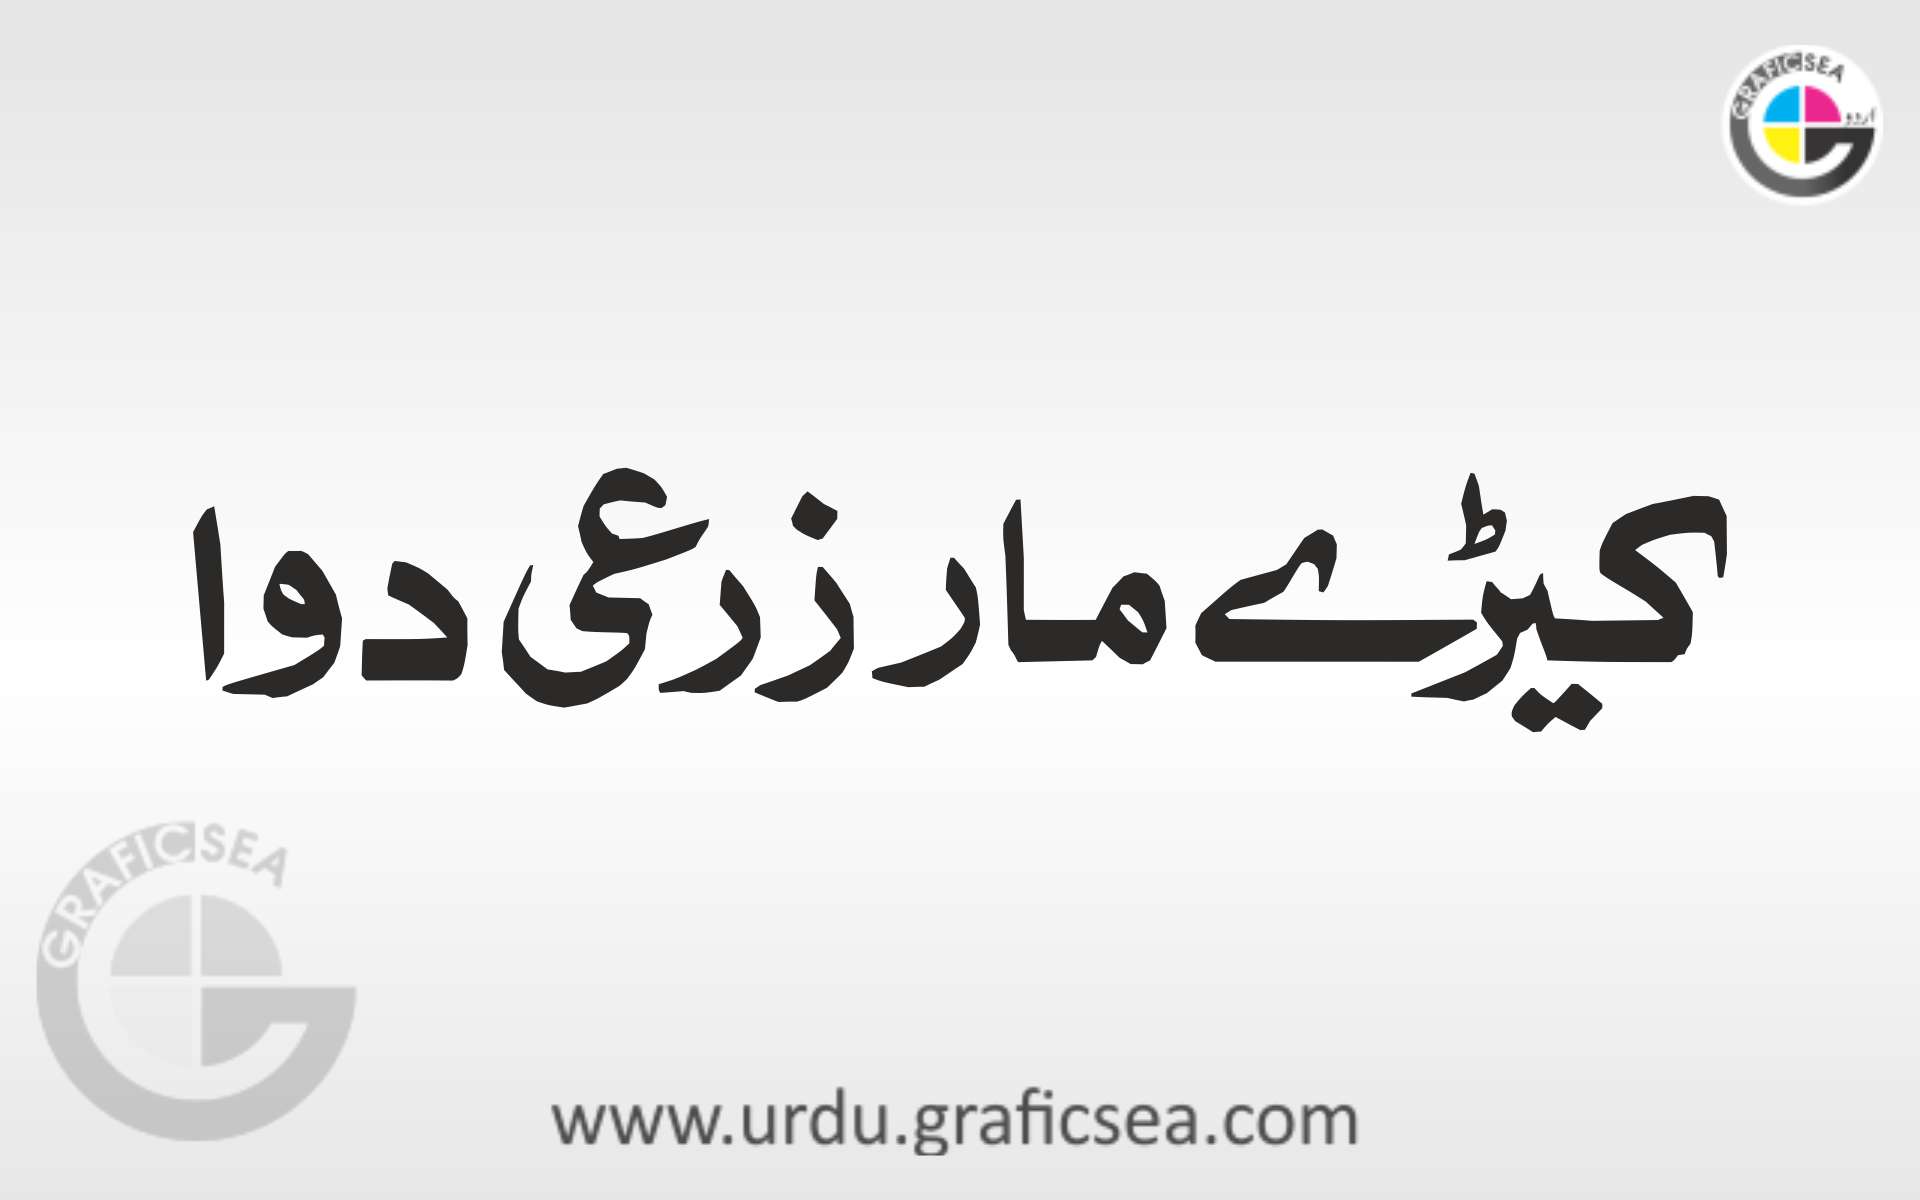 Keeray Mar Dawa Urdu Word Calligraphy free